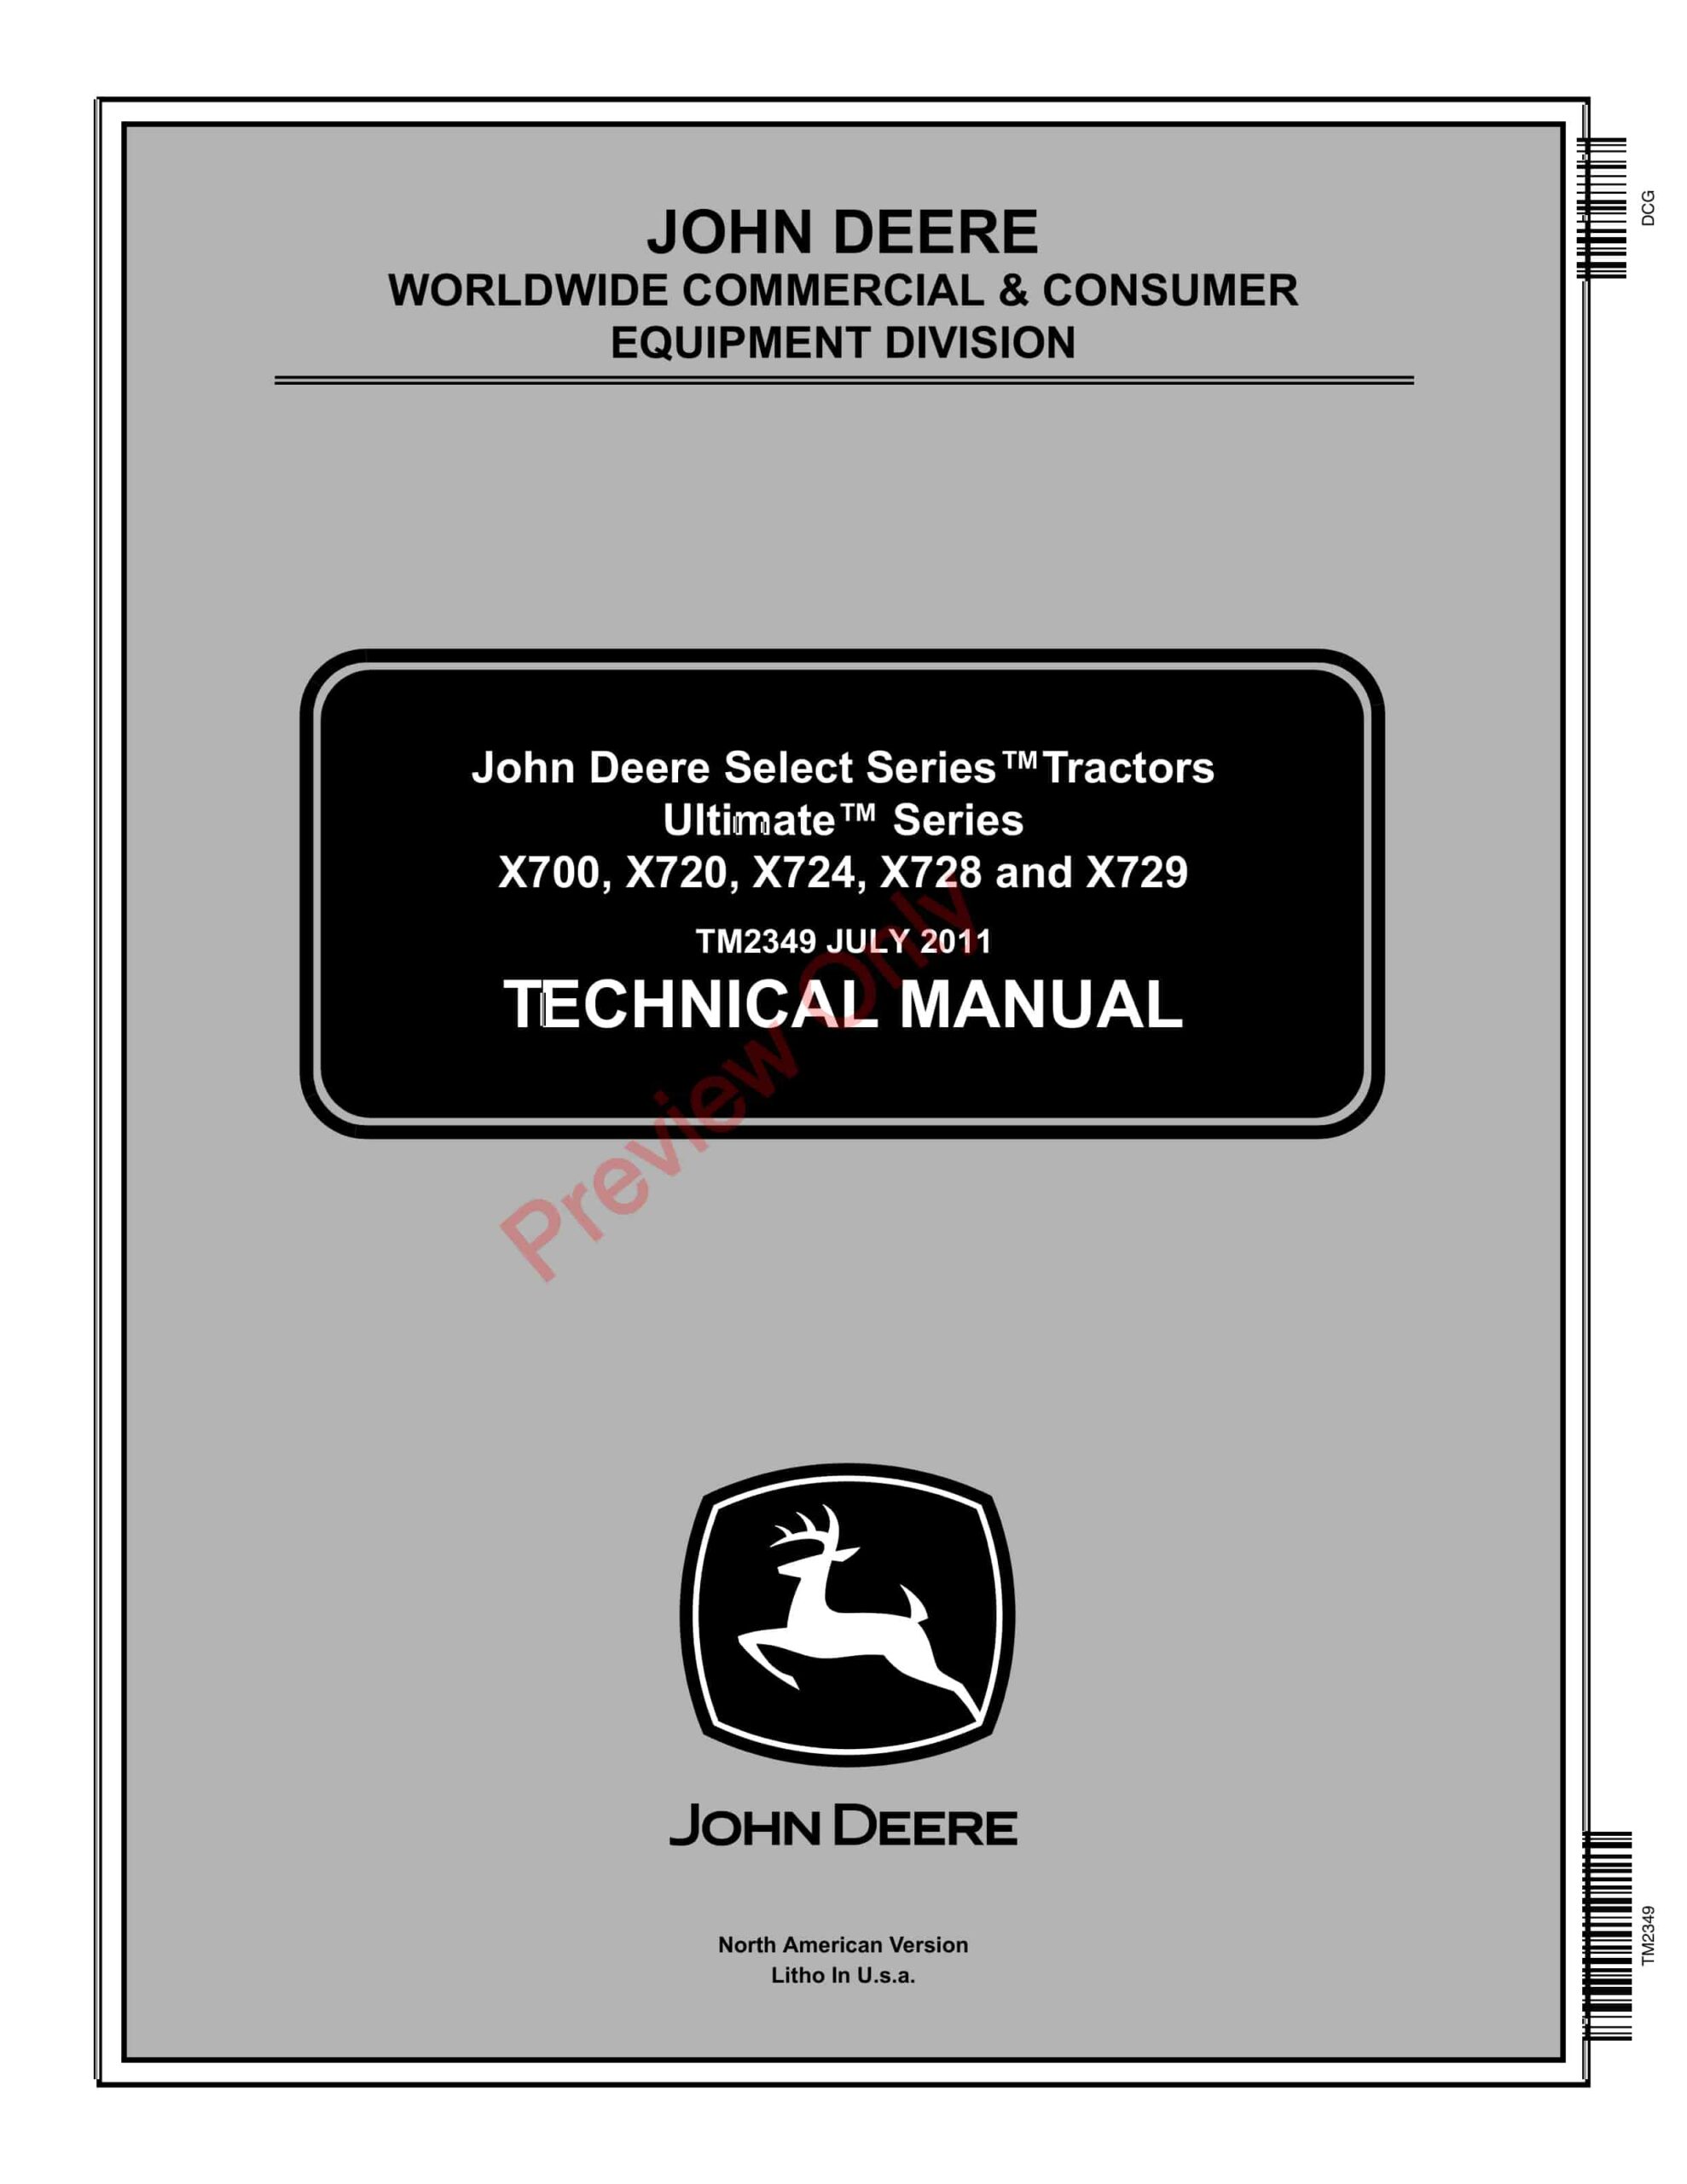 John Deere X700, X720, X724, X728 and X729 Ultimate Select Series Tractor Technical Manual TM2349 01JUL11-1